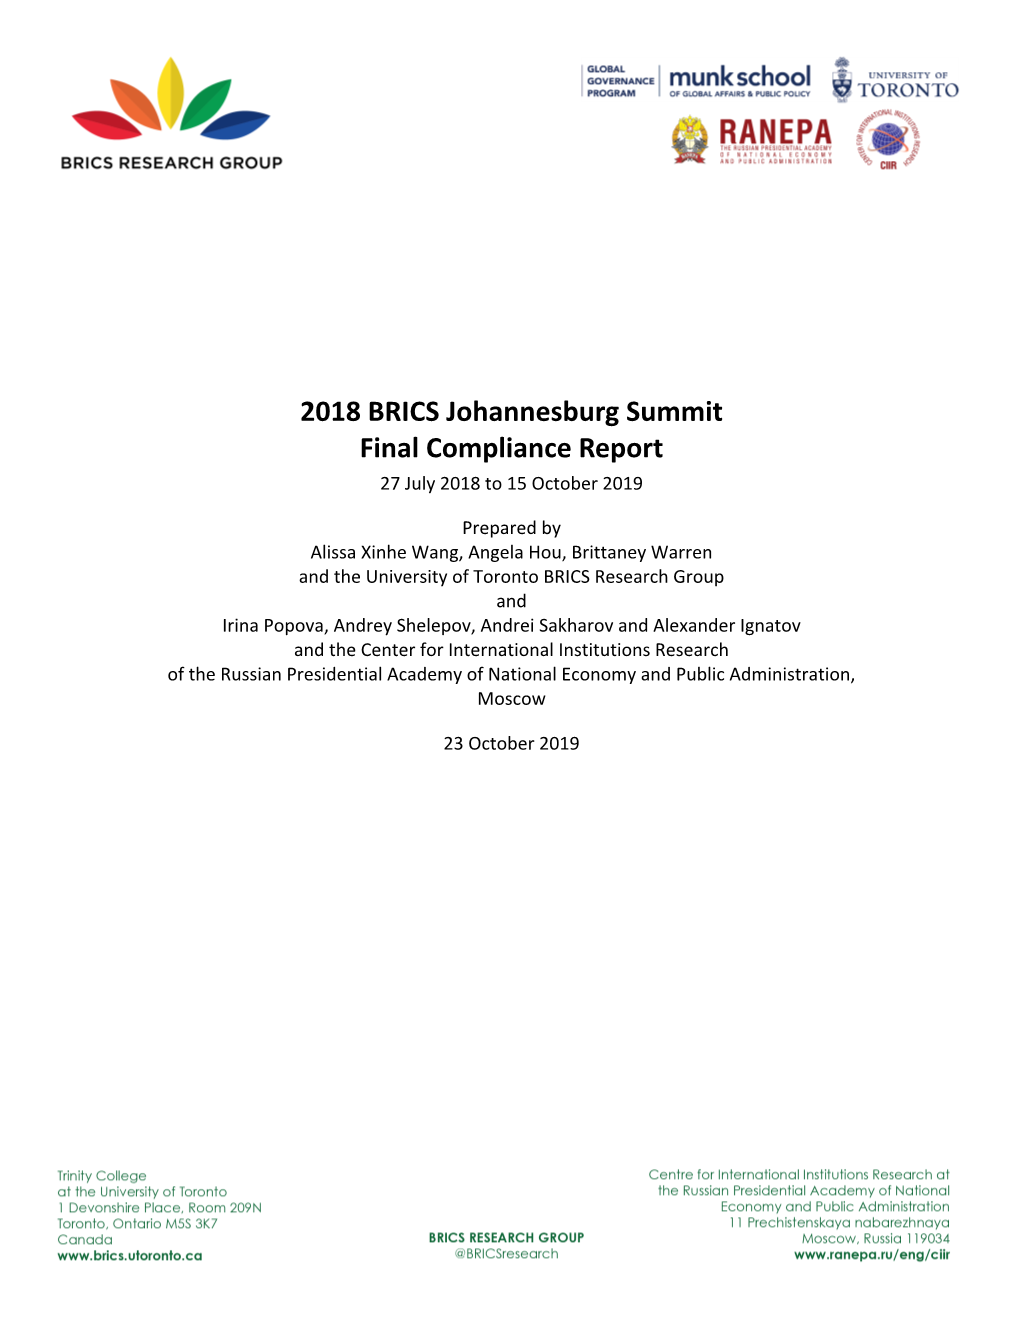 2018 BRICS Johannesburg Summit Final Compliance Report 27 July 2018 to 15 October 2019